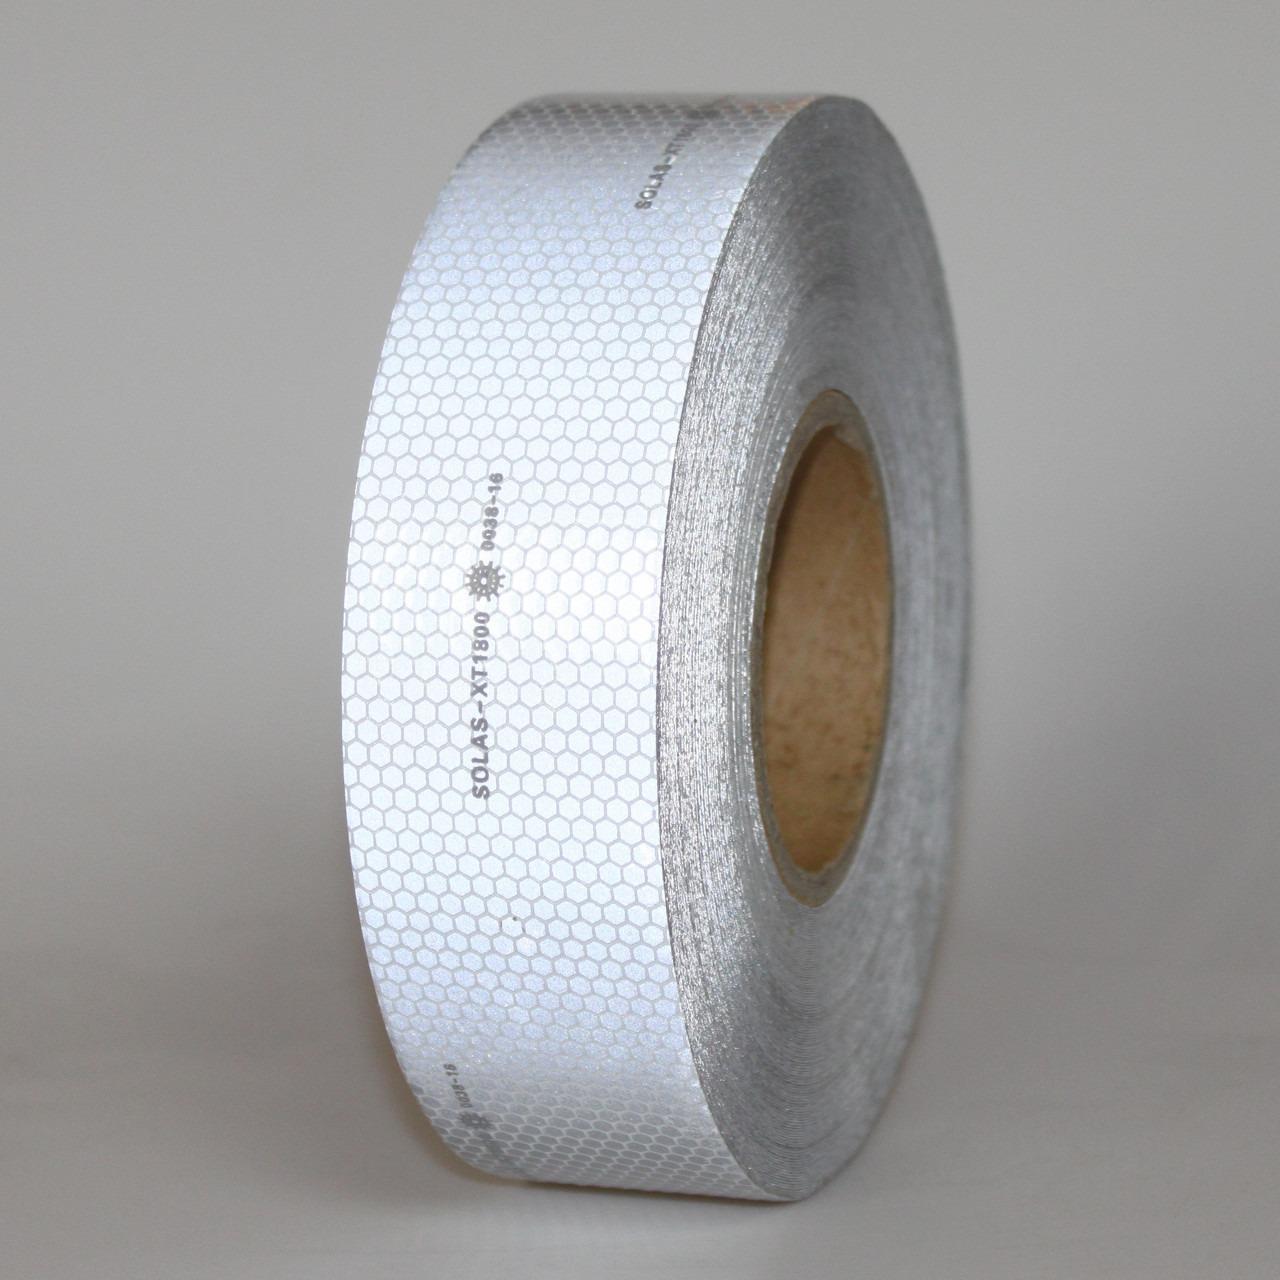 Self-Adhesive Retro-Reflective Solas Tape Hi-Viz tape 50mm x 2m Marine Glint 